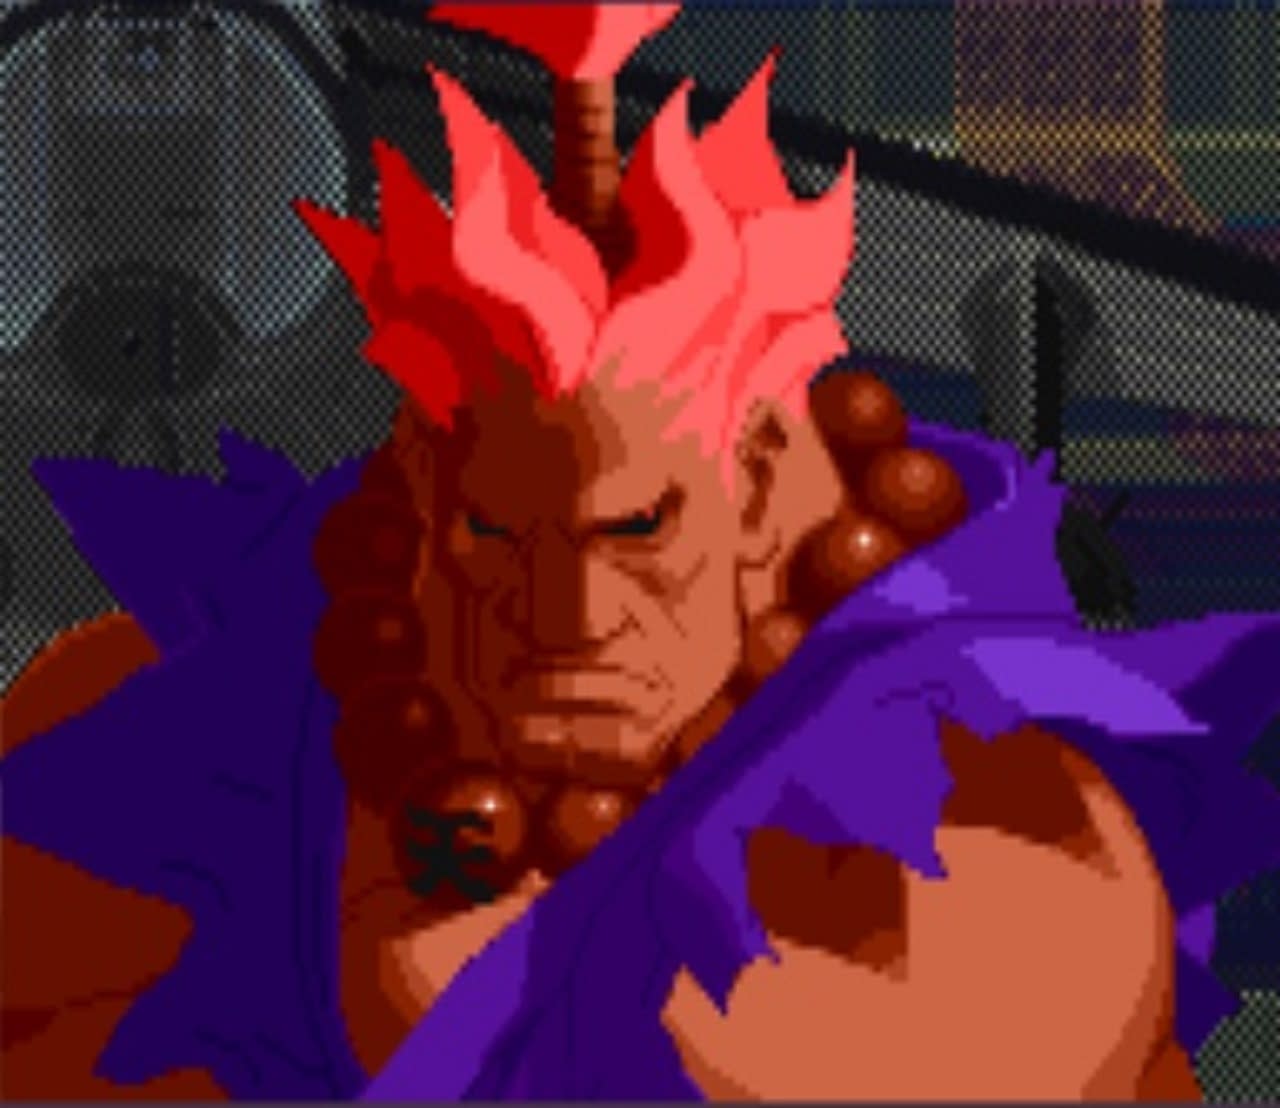 VideoGameArt&Tidbits on X: Street Fighter Alpha - Akuma artwork.   / X